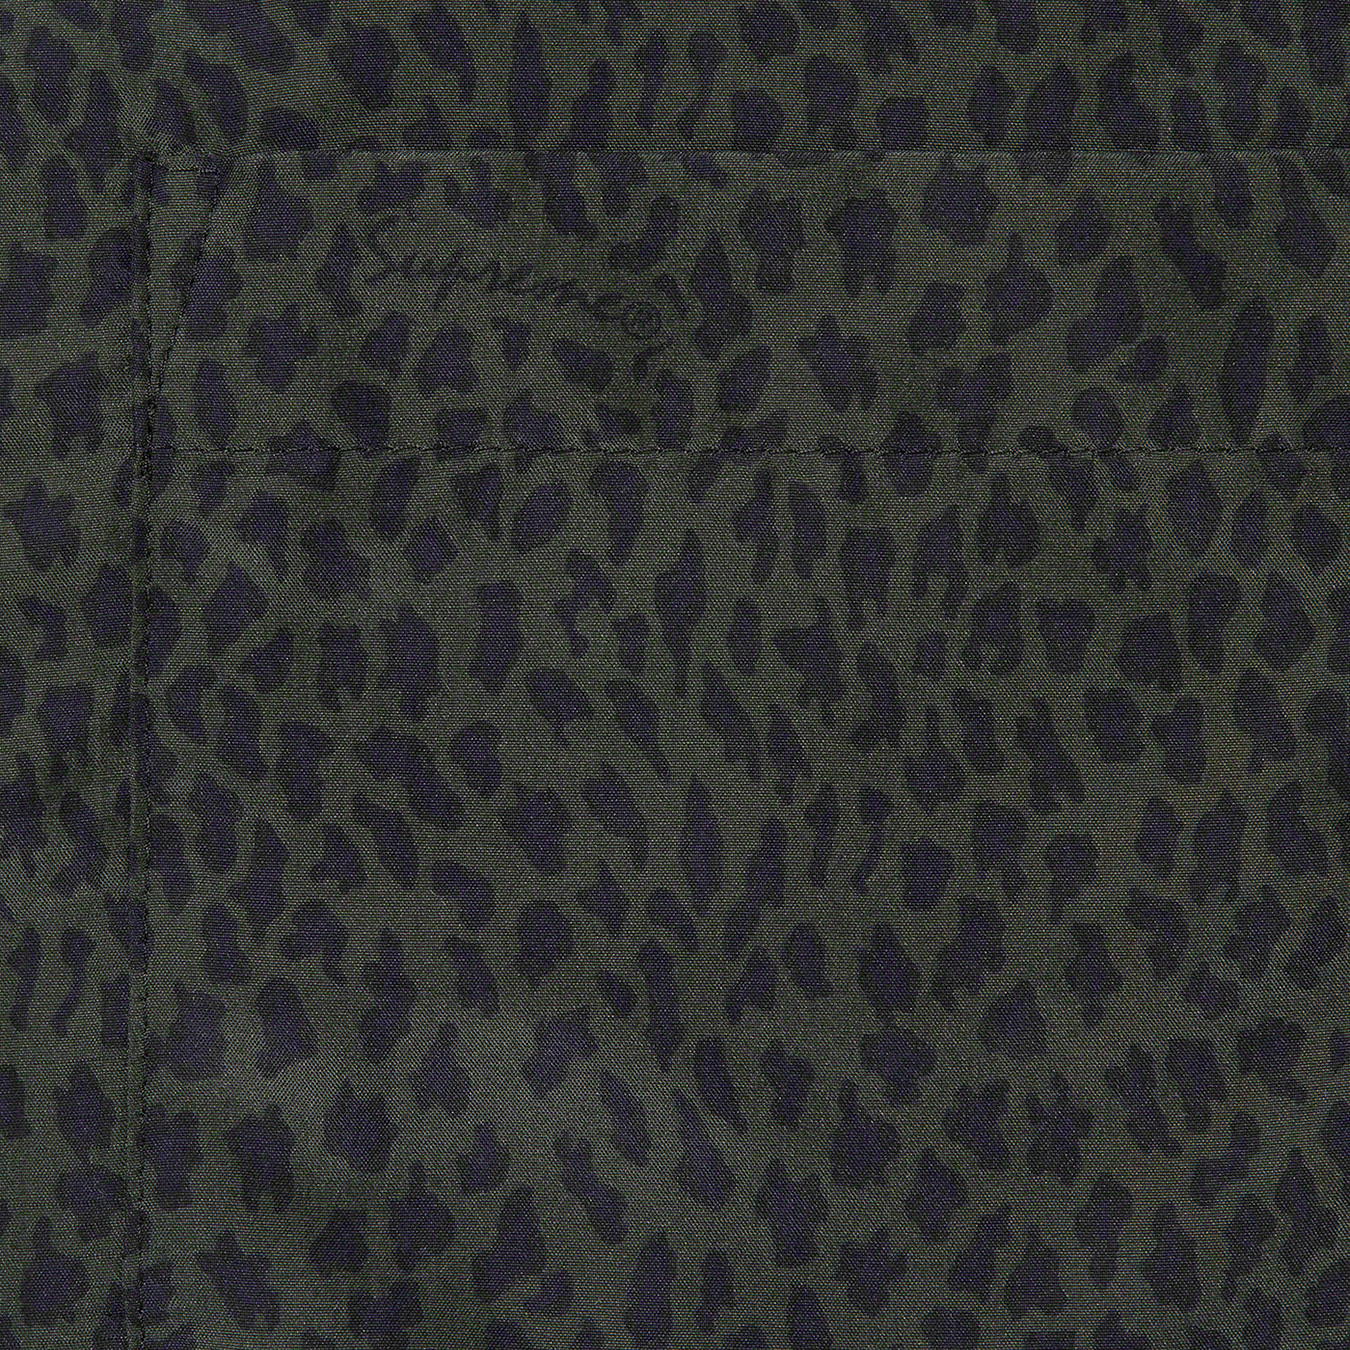 Supreme / Leopard Silk S/S Shirt